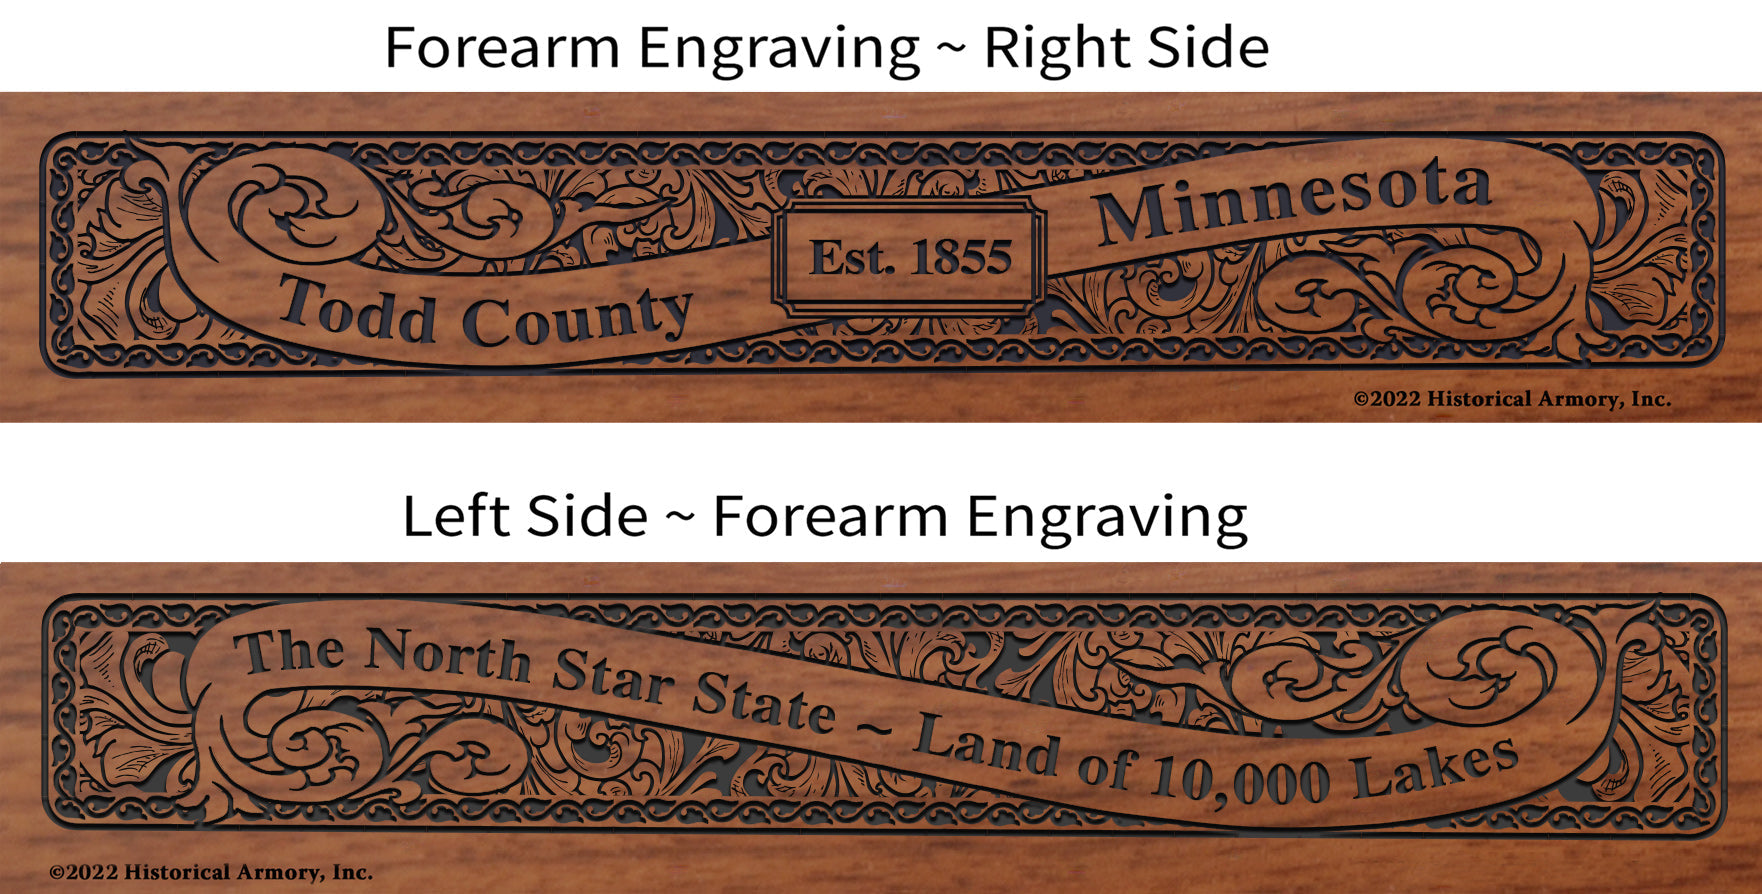 Todd County Minnesota Engraved Rifle Forearm